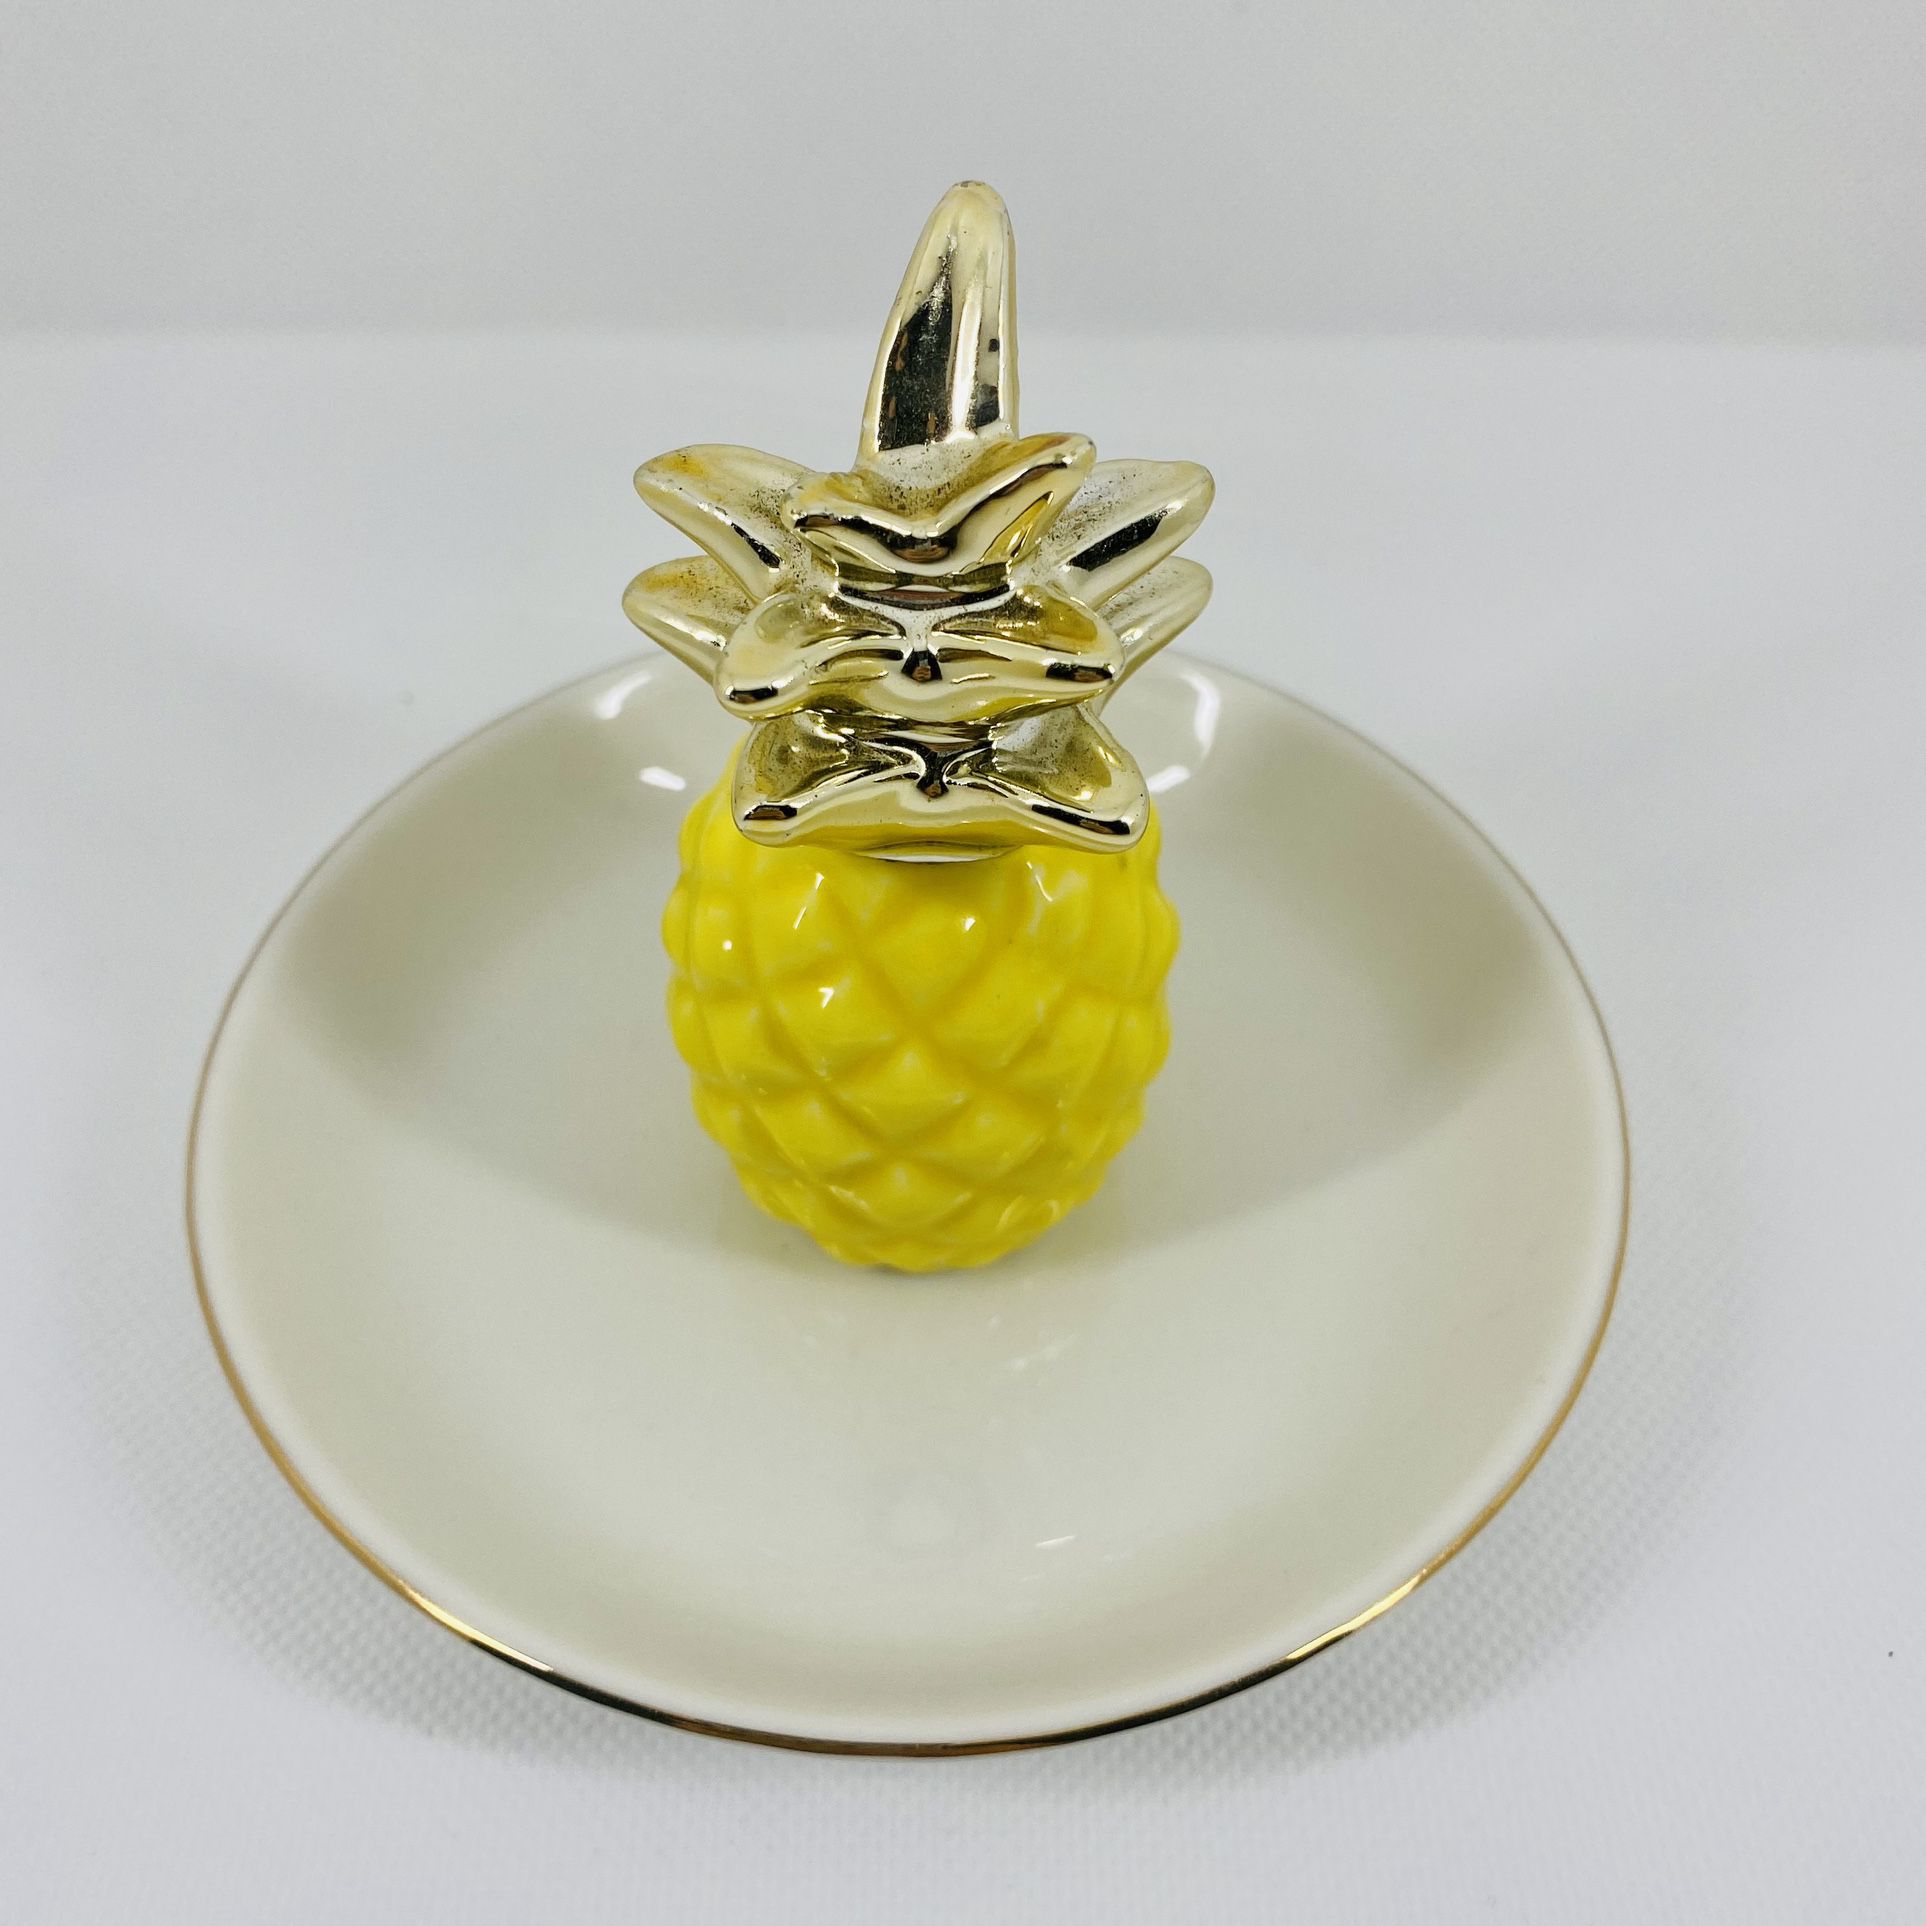 Pineapple Ring Holder Decor Ceramic Dish Plate Jewel Display Organizer